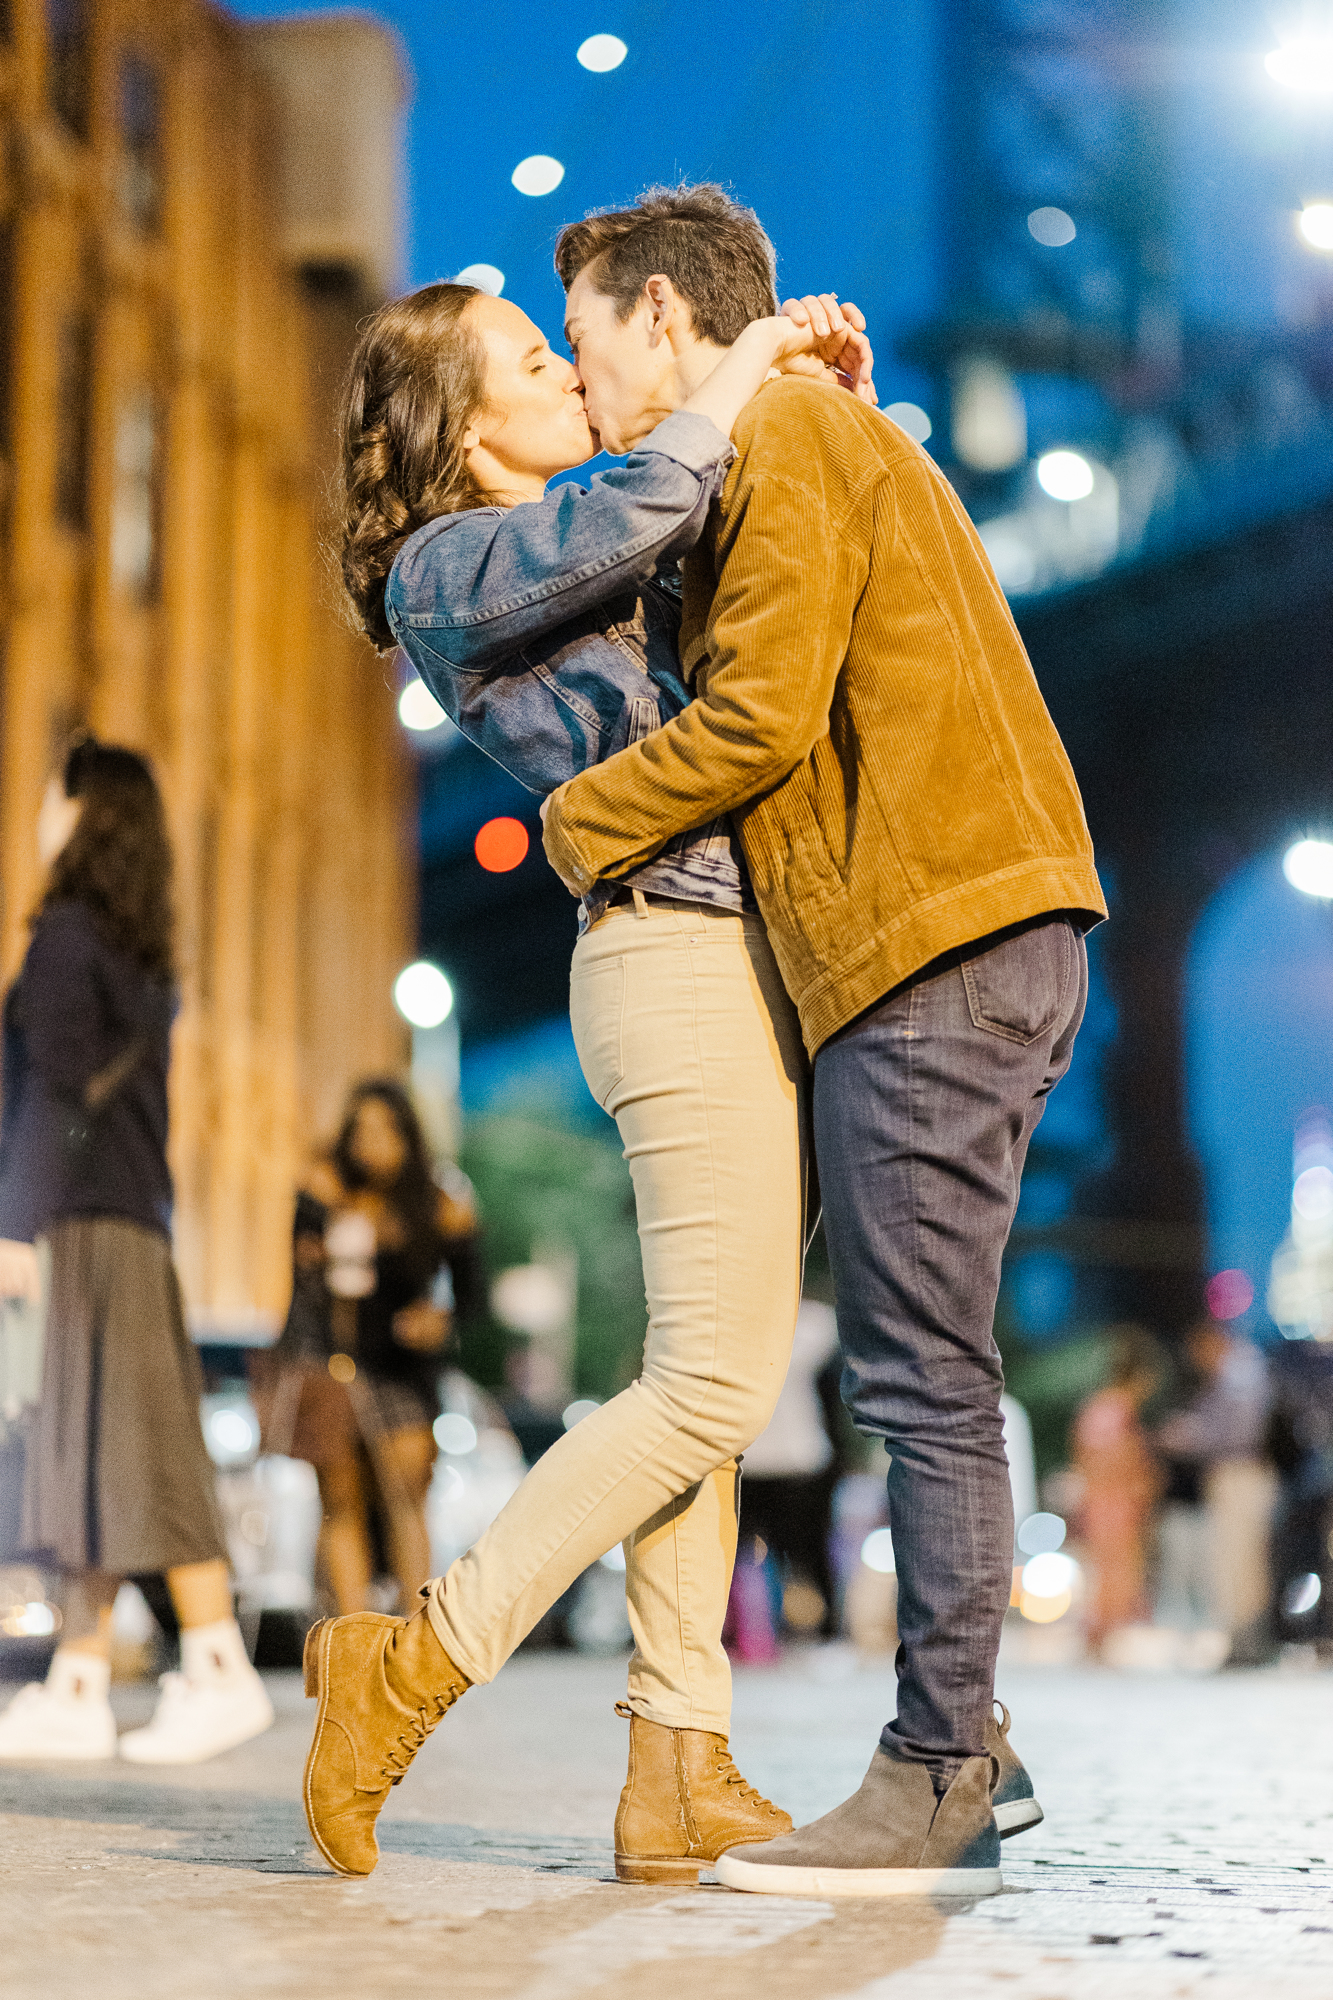 Sensational DUMBO Engagement Photo Shoot in NYC